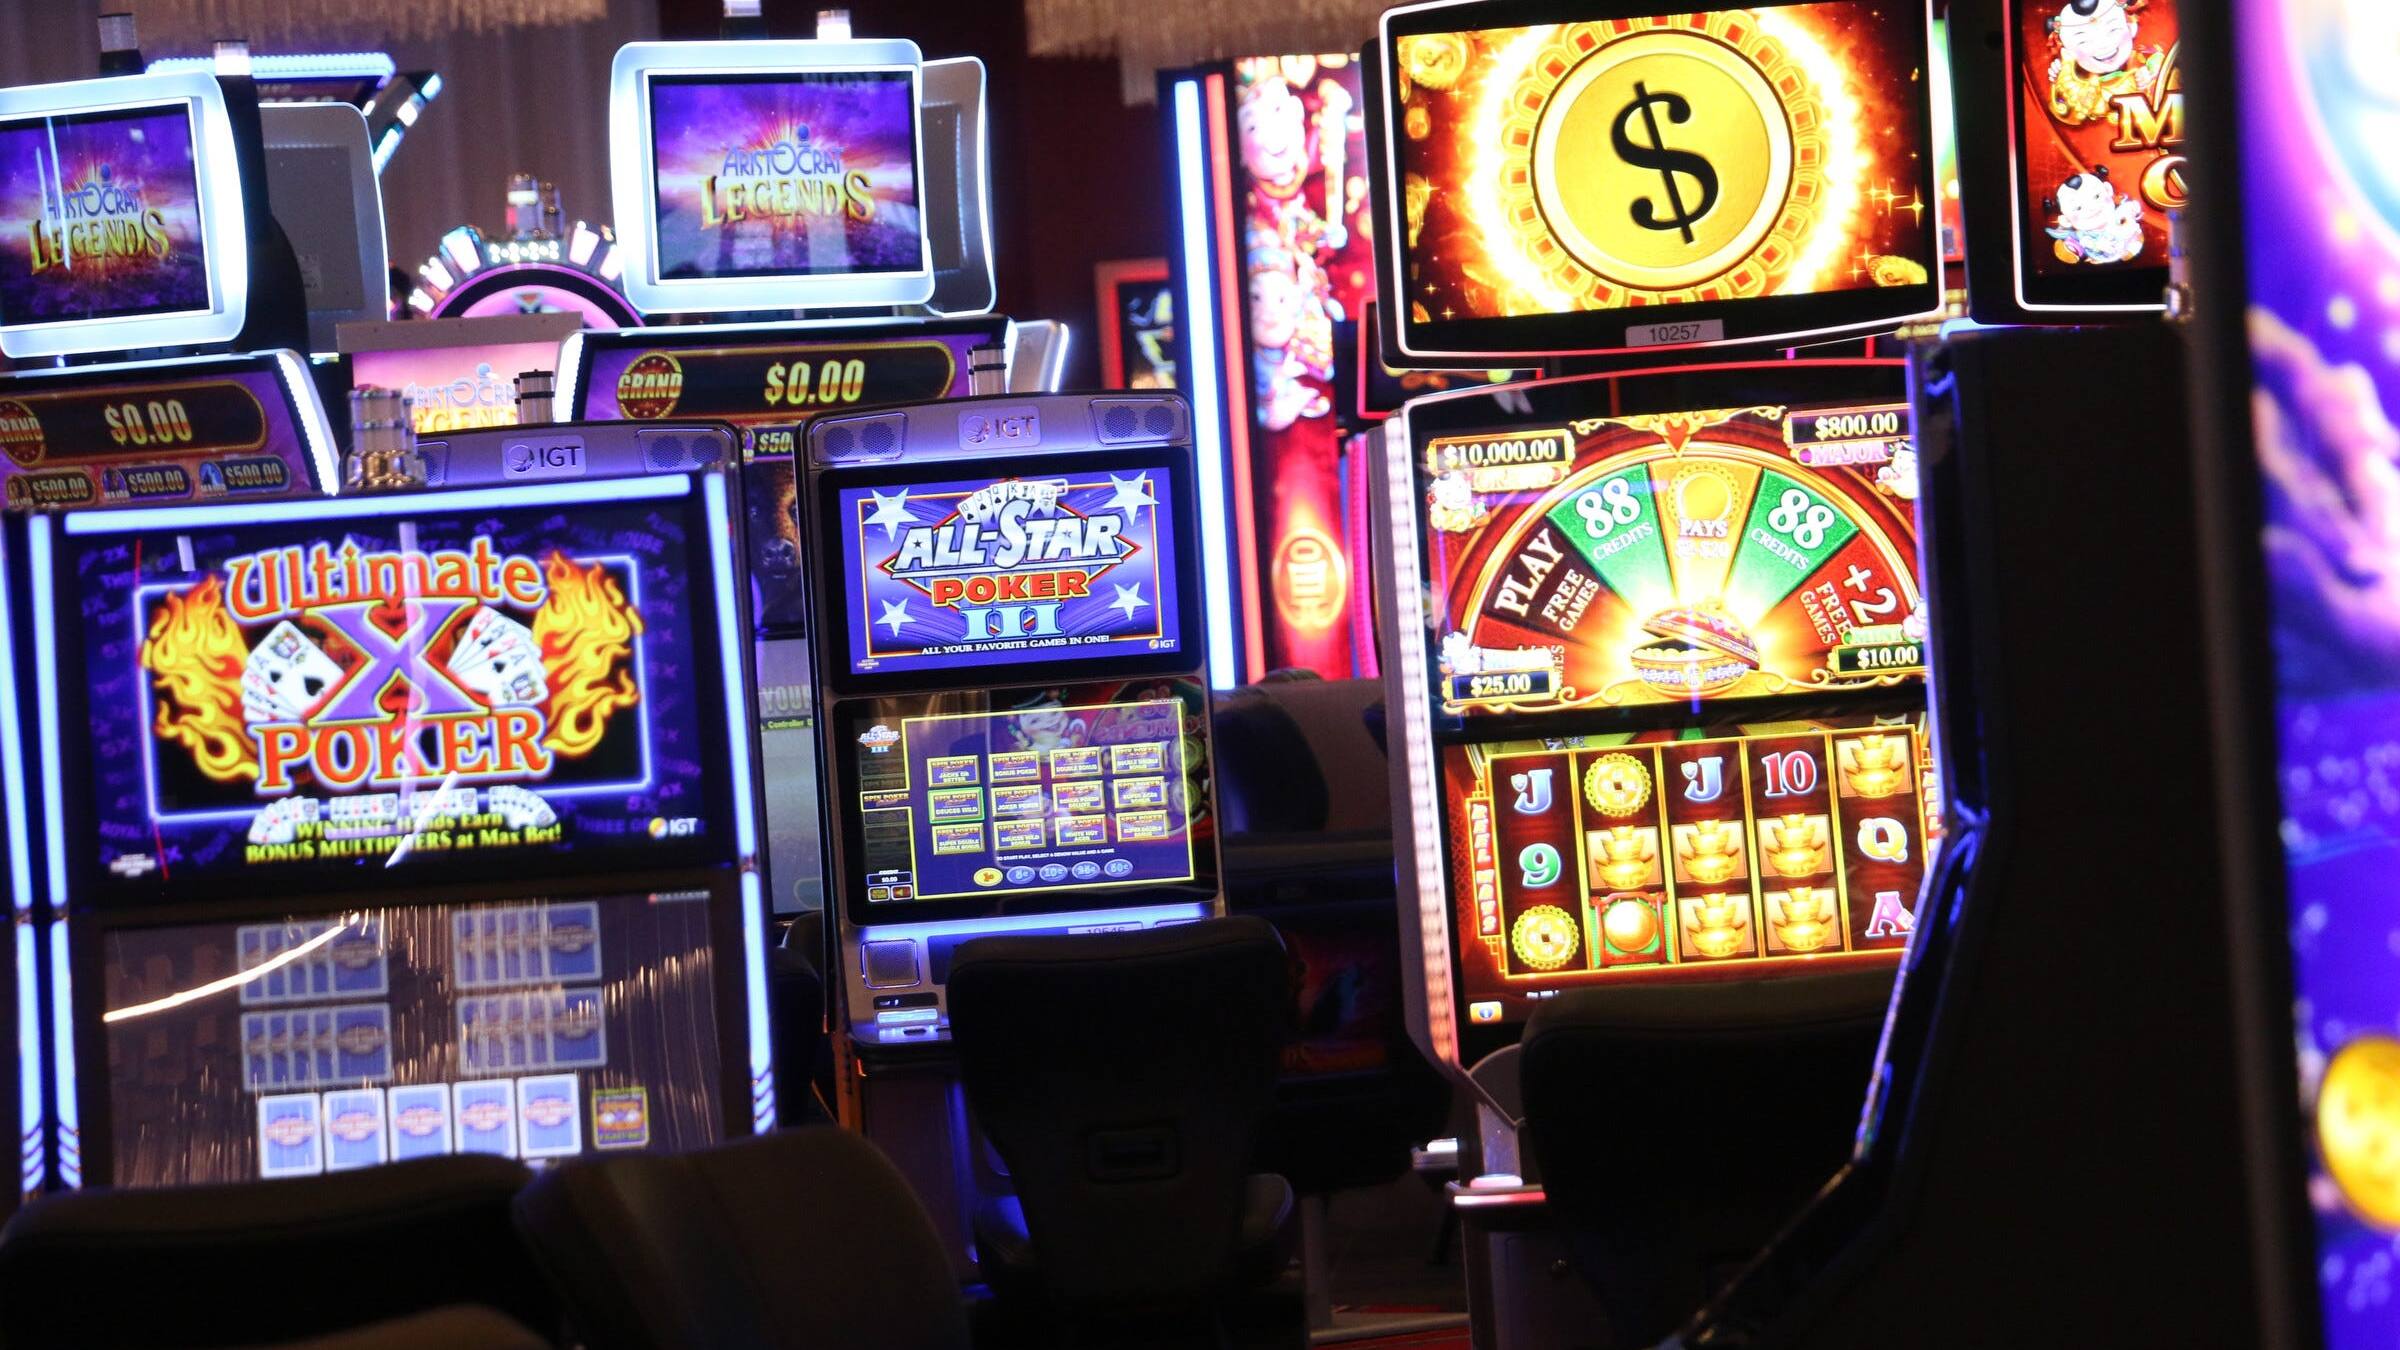 New Jersey Online Casino Bonuses